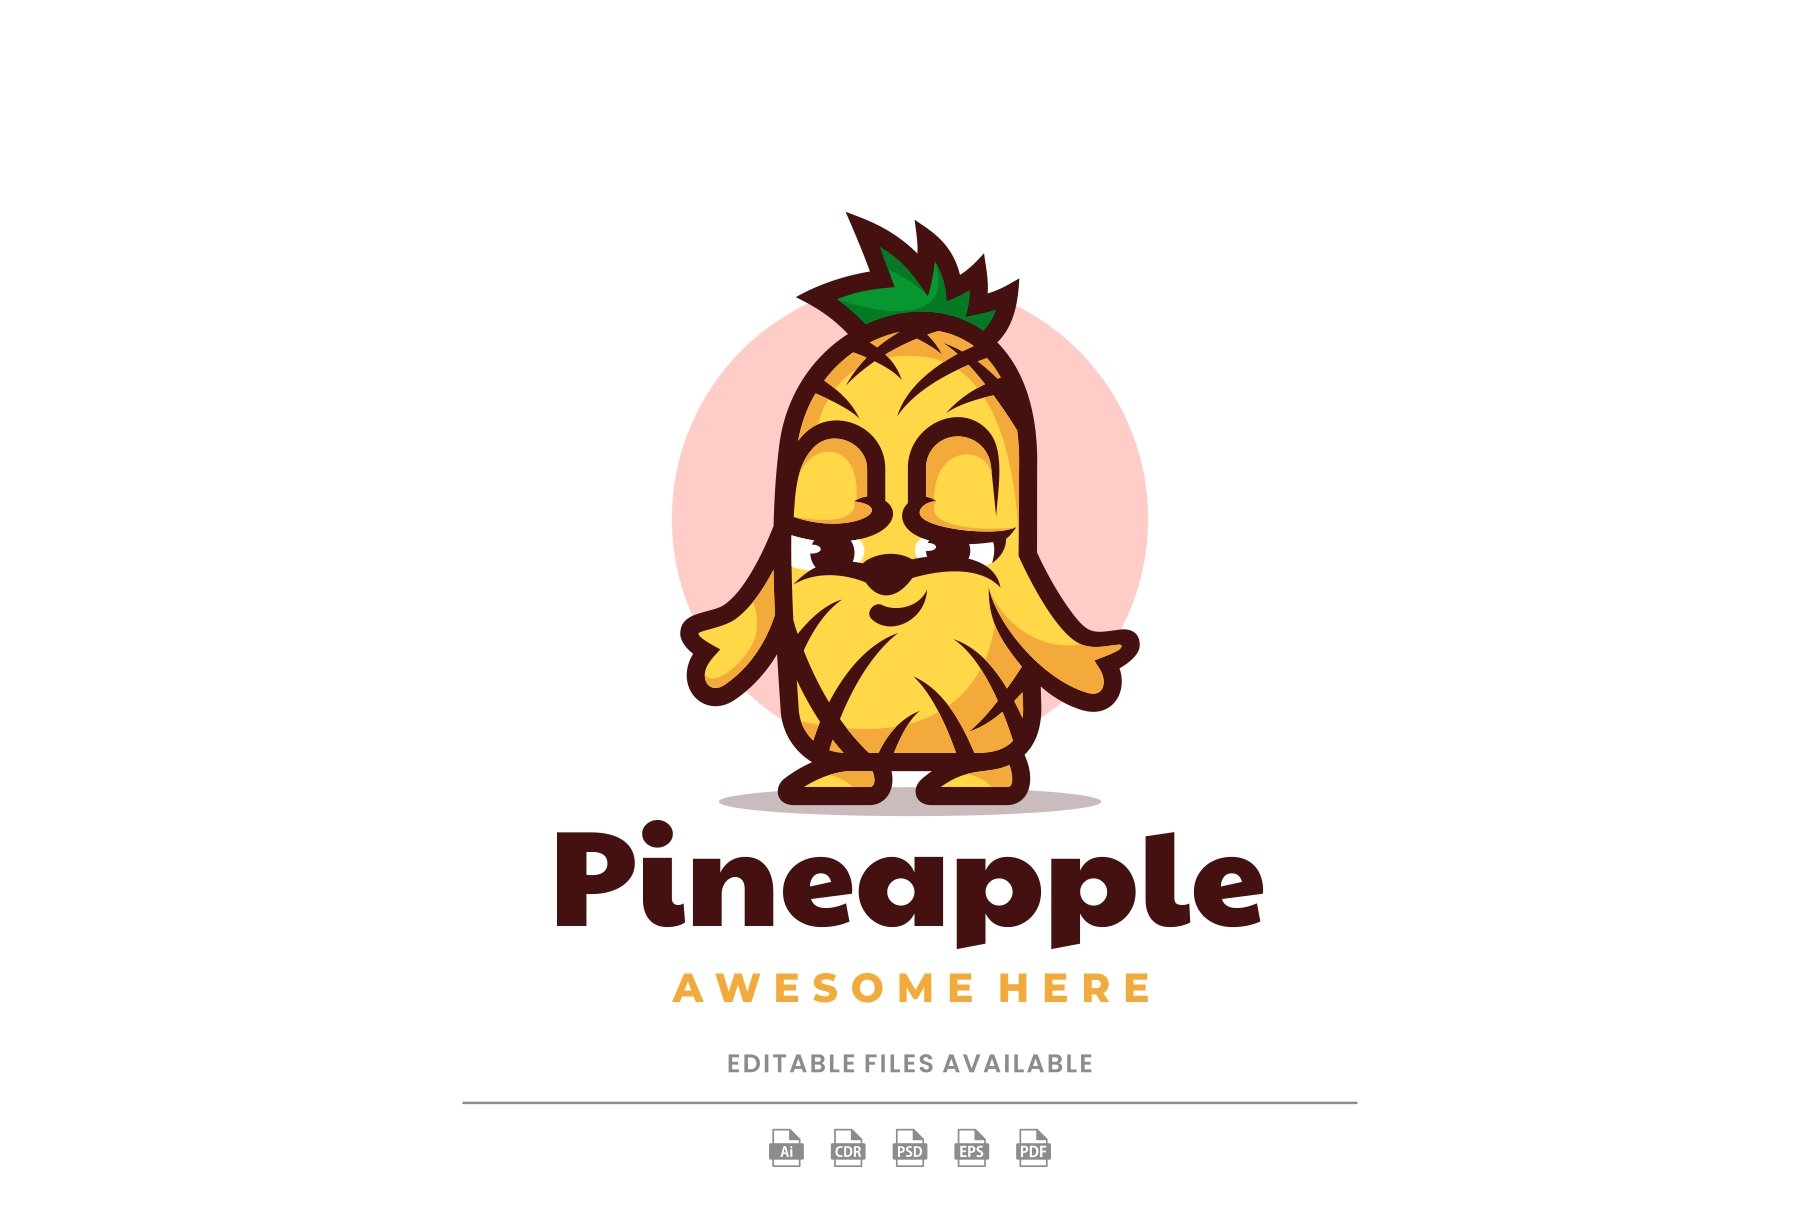 Pineapple Simple Mascot Logo cover image.